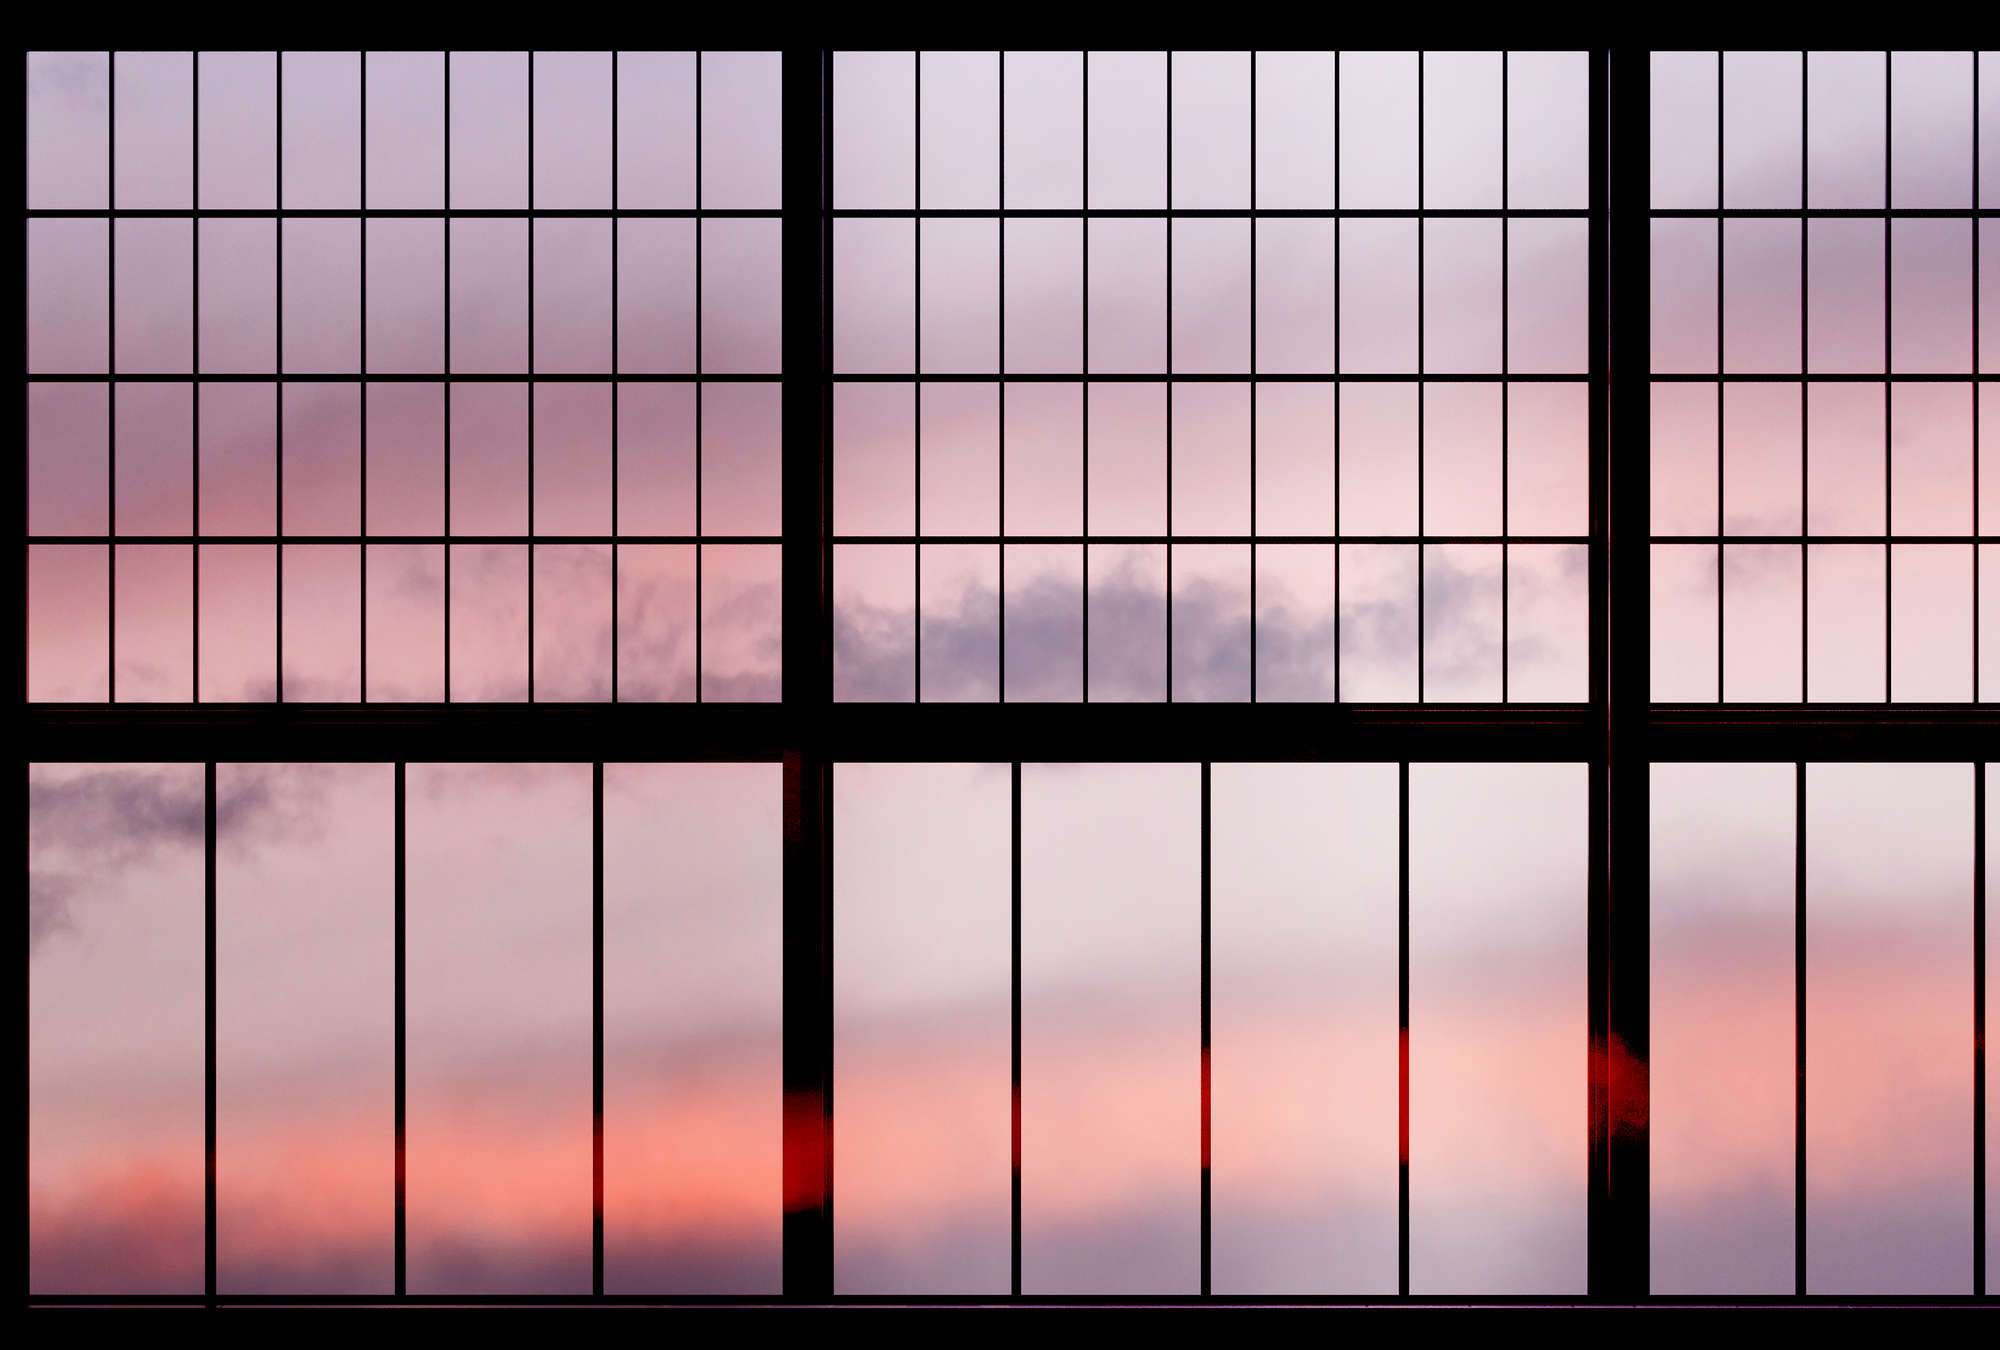             Sky 1 - Digital behang Venster Zonsopgang - Roze, Zwart | Strukturenvlies
        